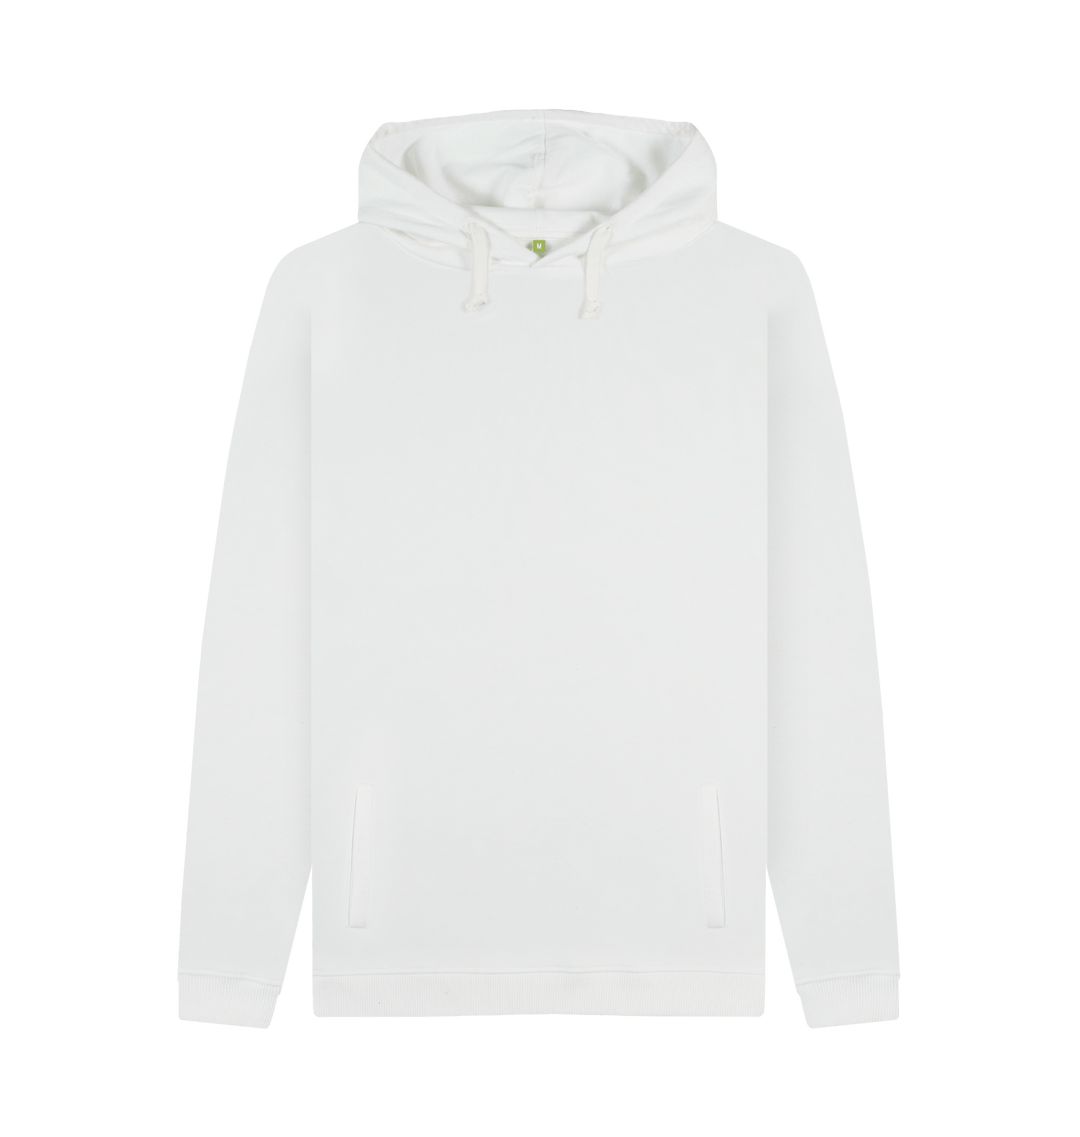 White Men's organic cotton hoodie